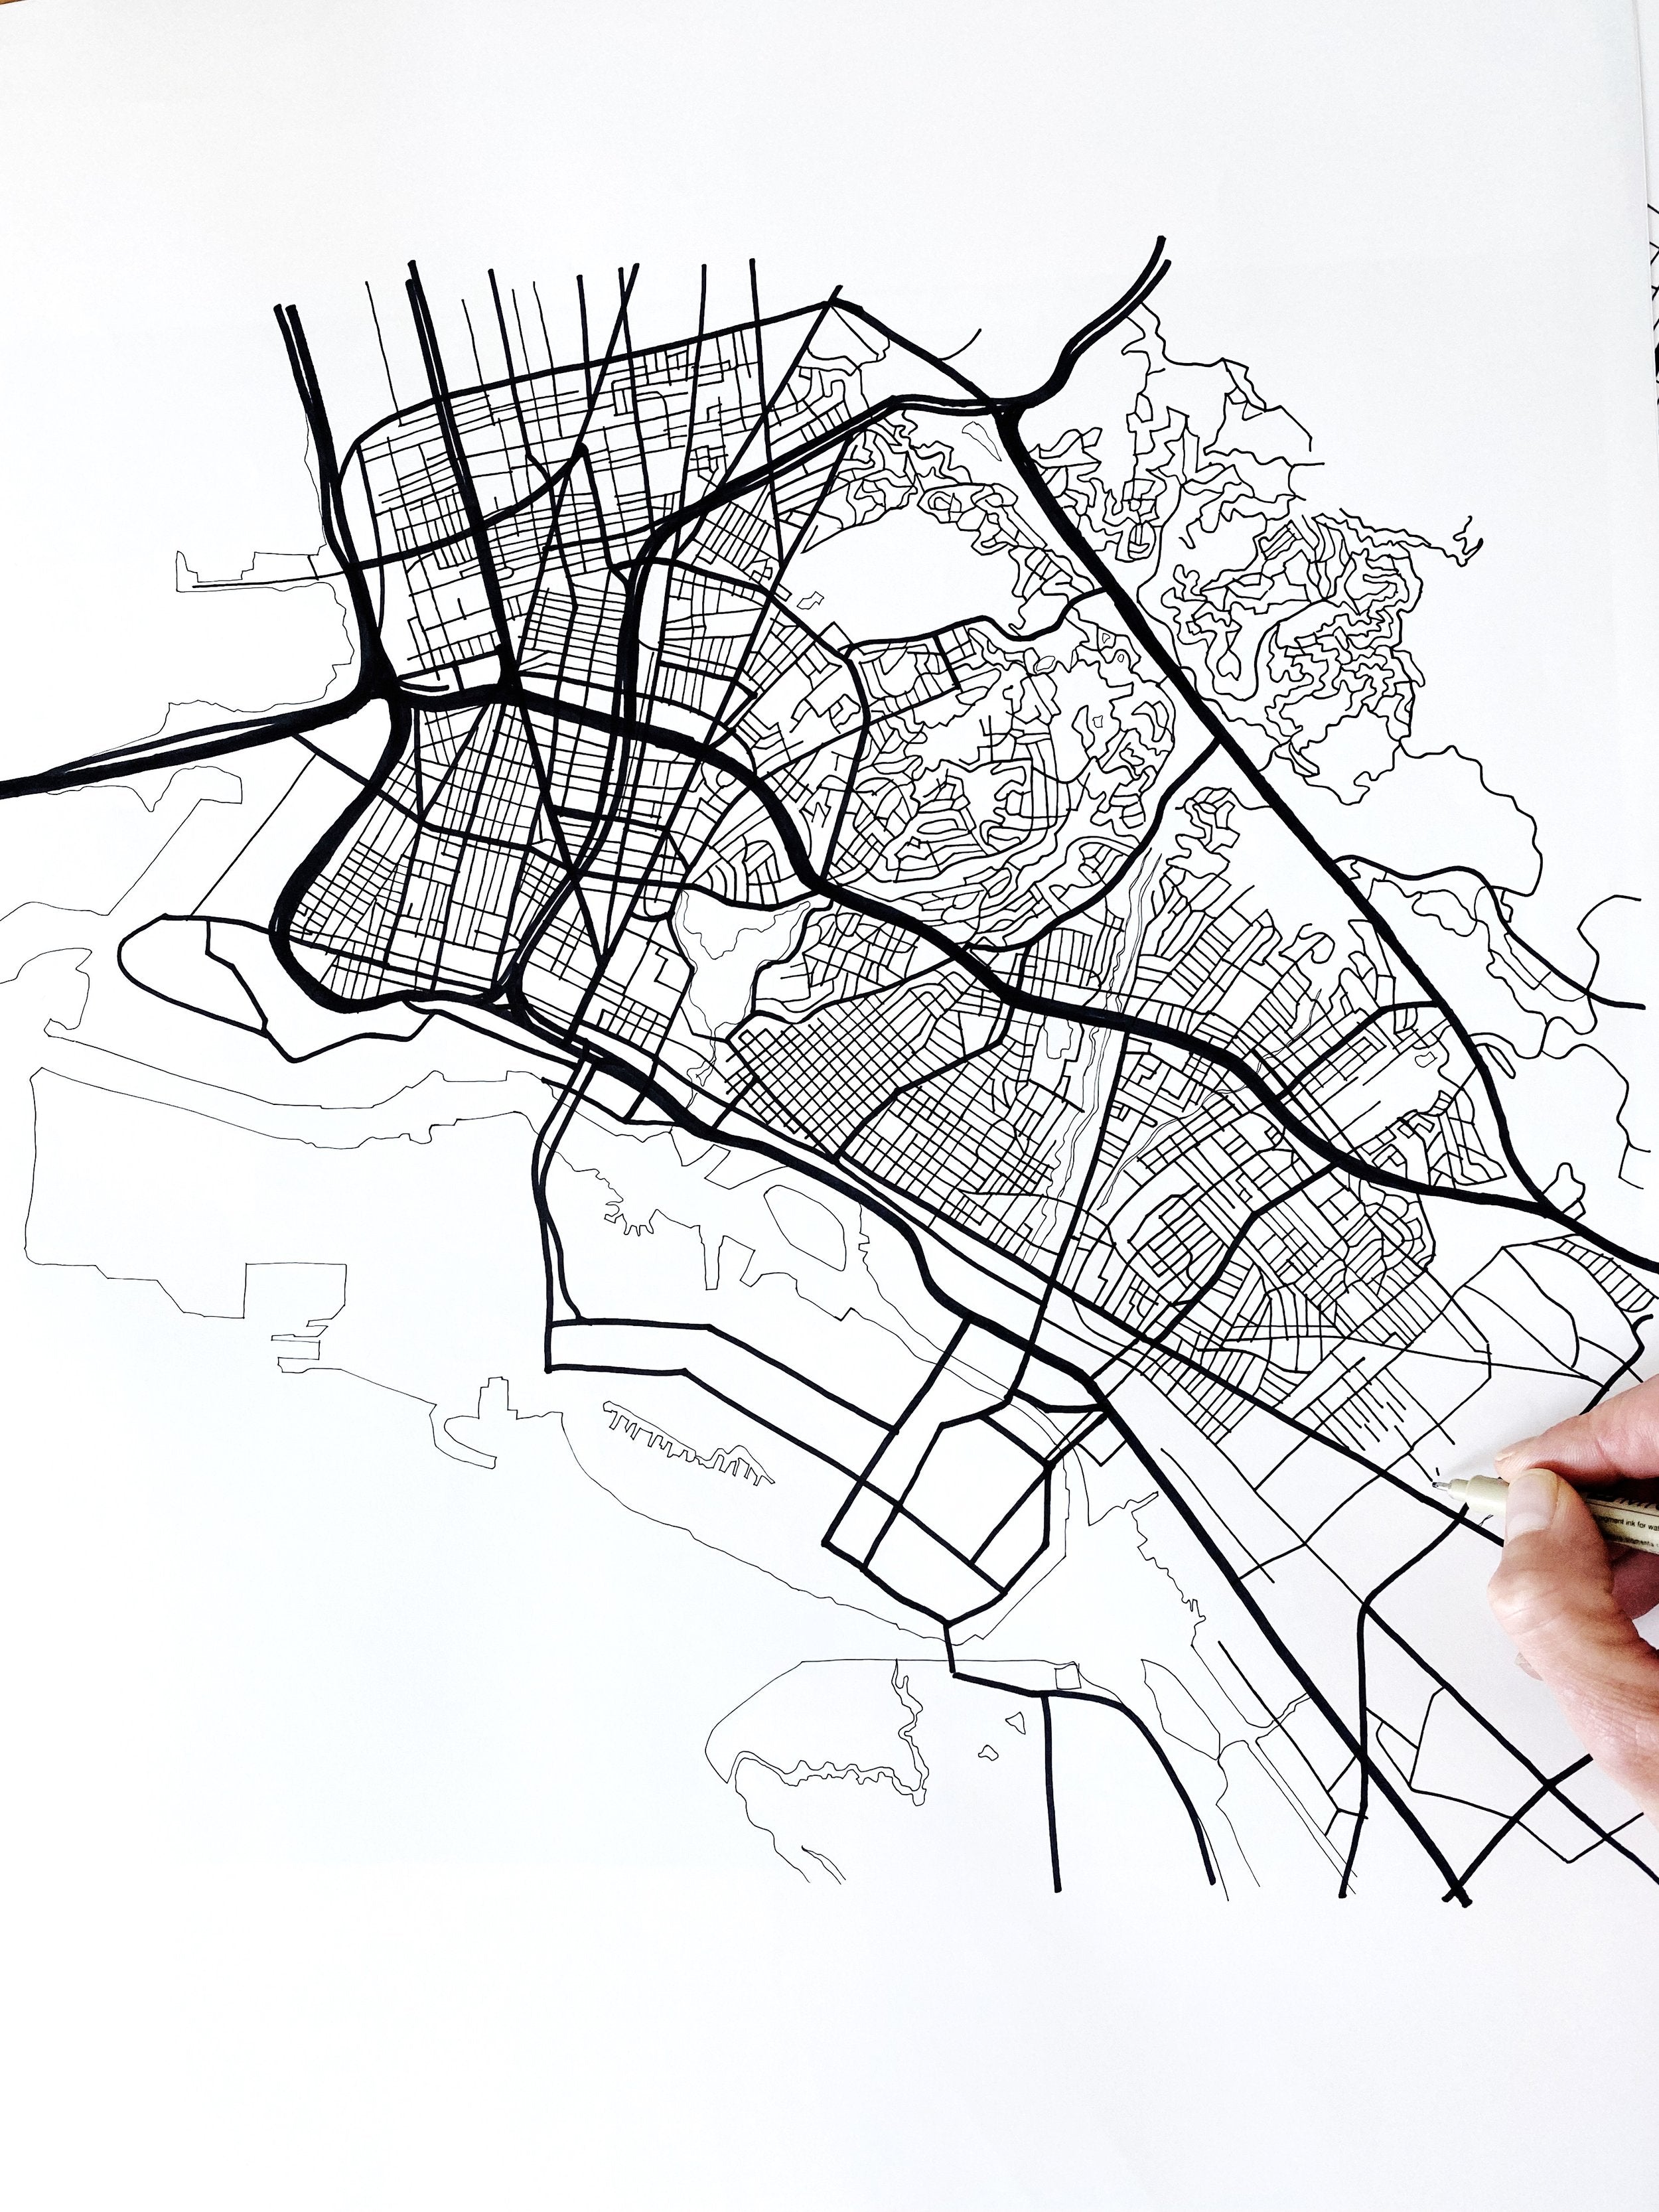 OAKLAND, California Urban Fabrics City Map: PRINT